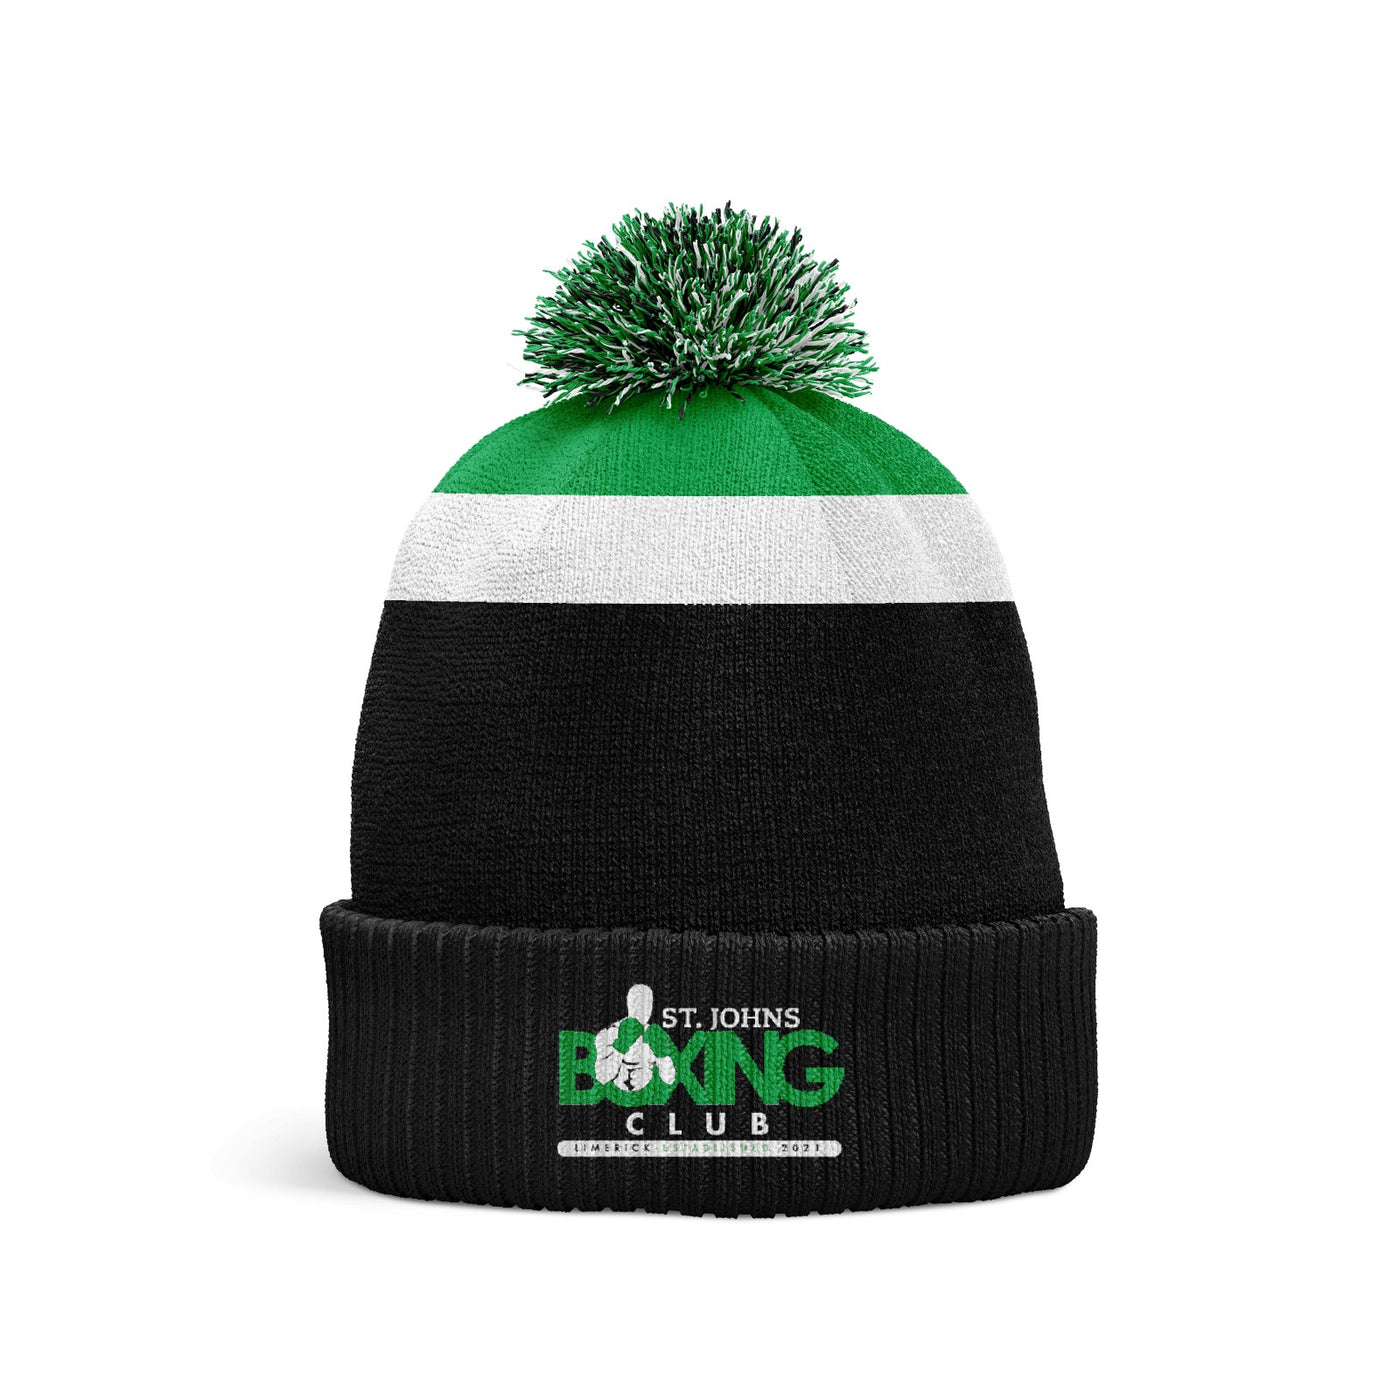 St. Johns Boxing Club - Beanie Hat